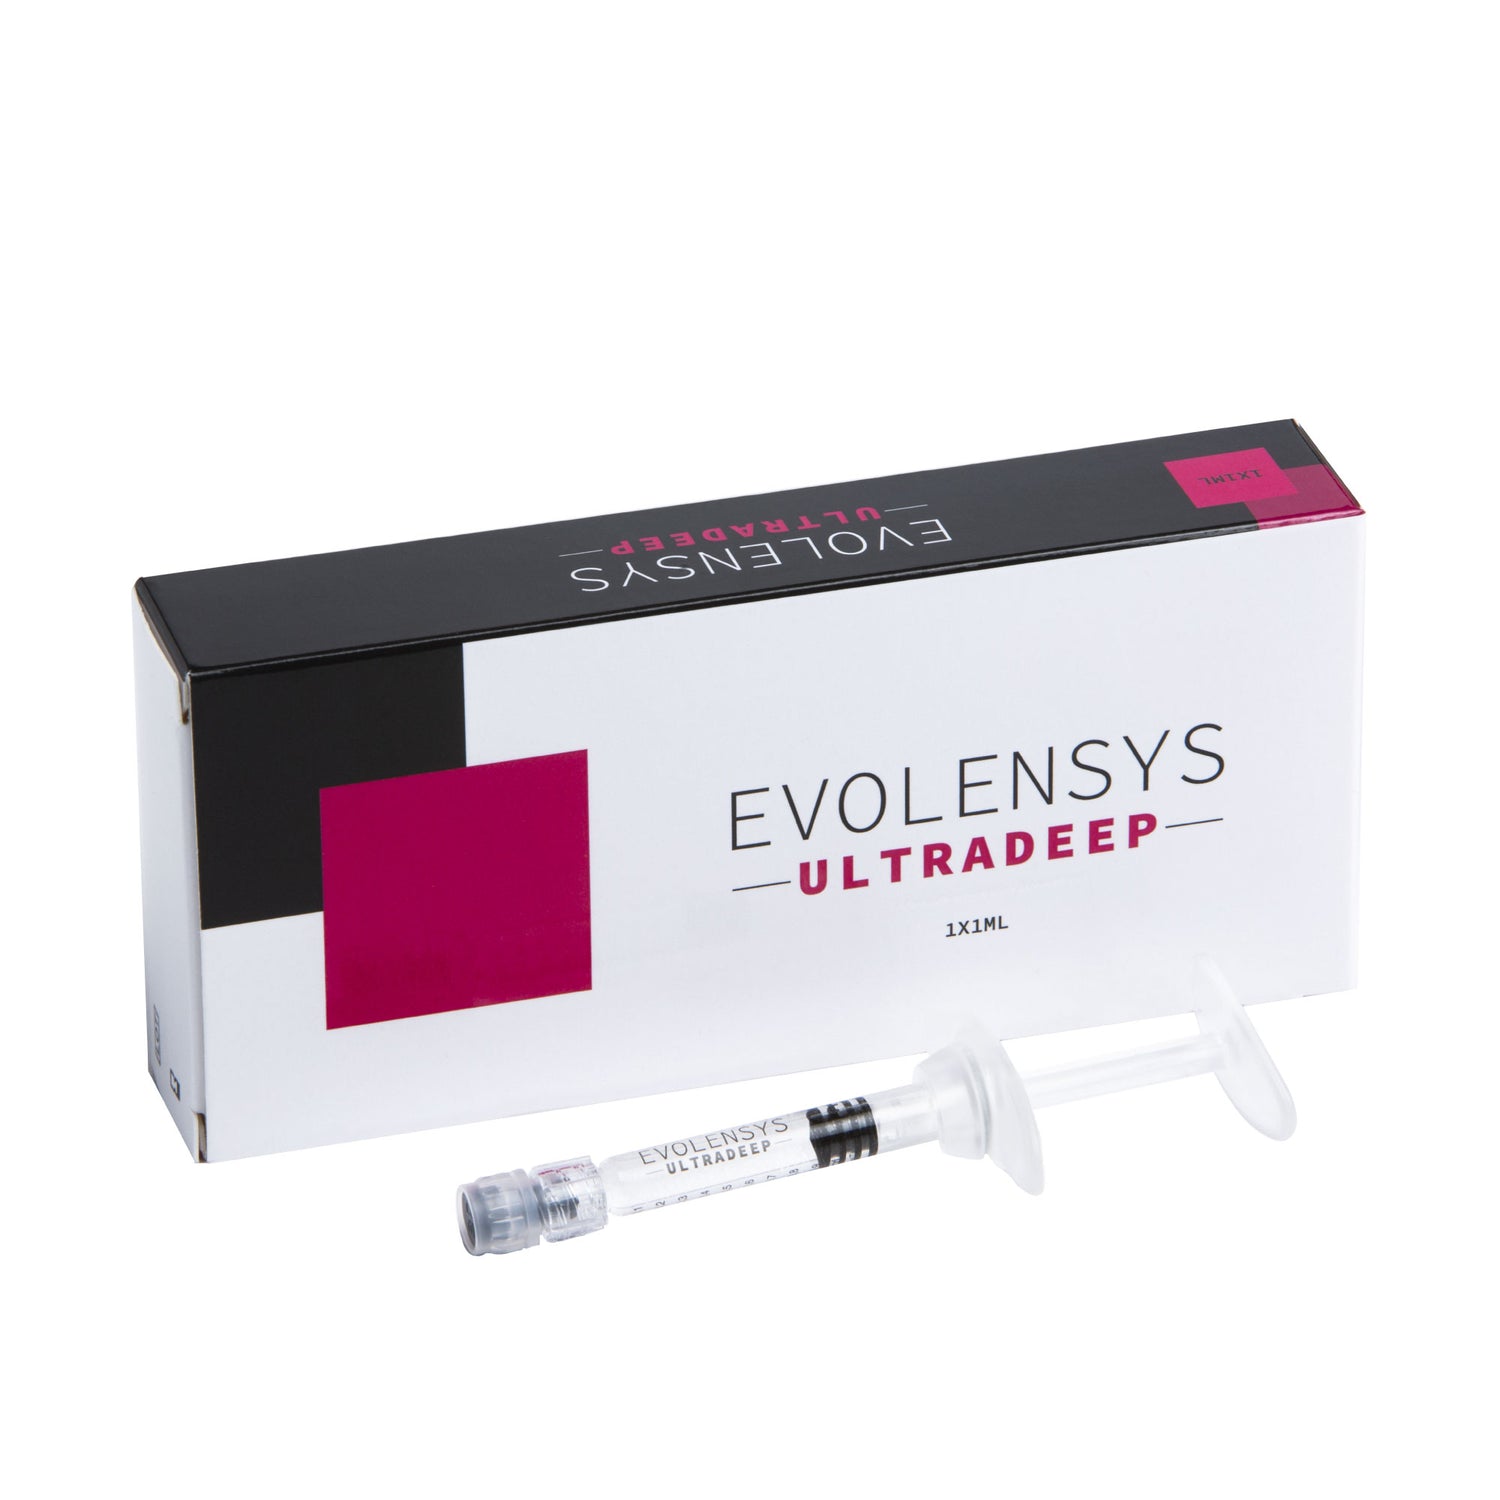 EVOLENSYS ULTRADEEP FILLER – Einphasiges Gel-Hyaluronsäure-Konzentration 25 mg/ml